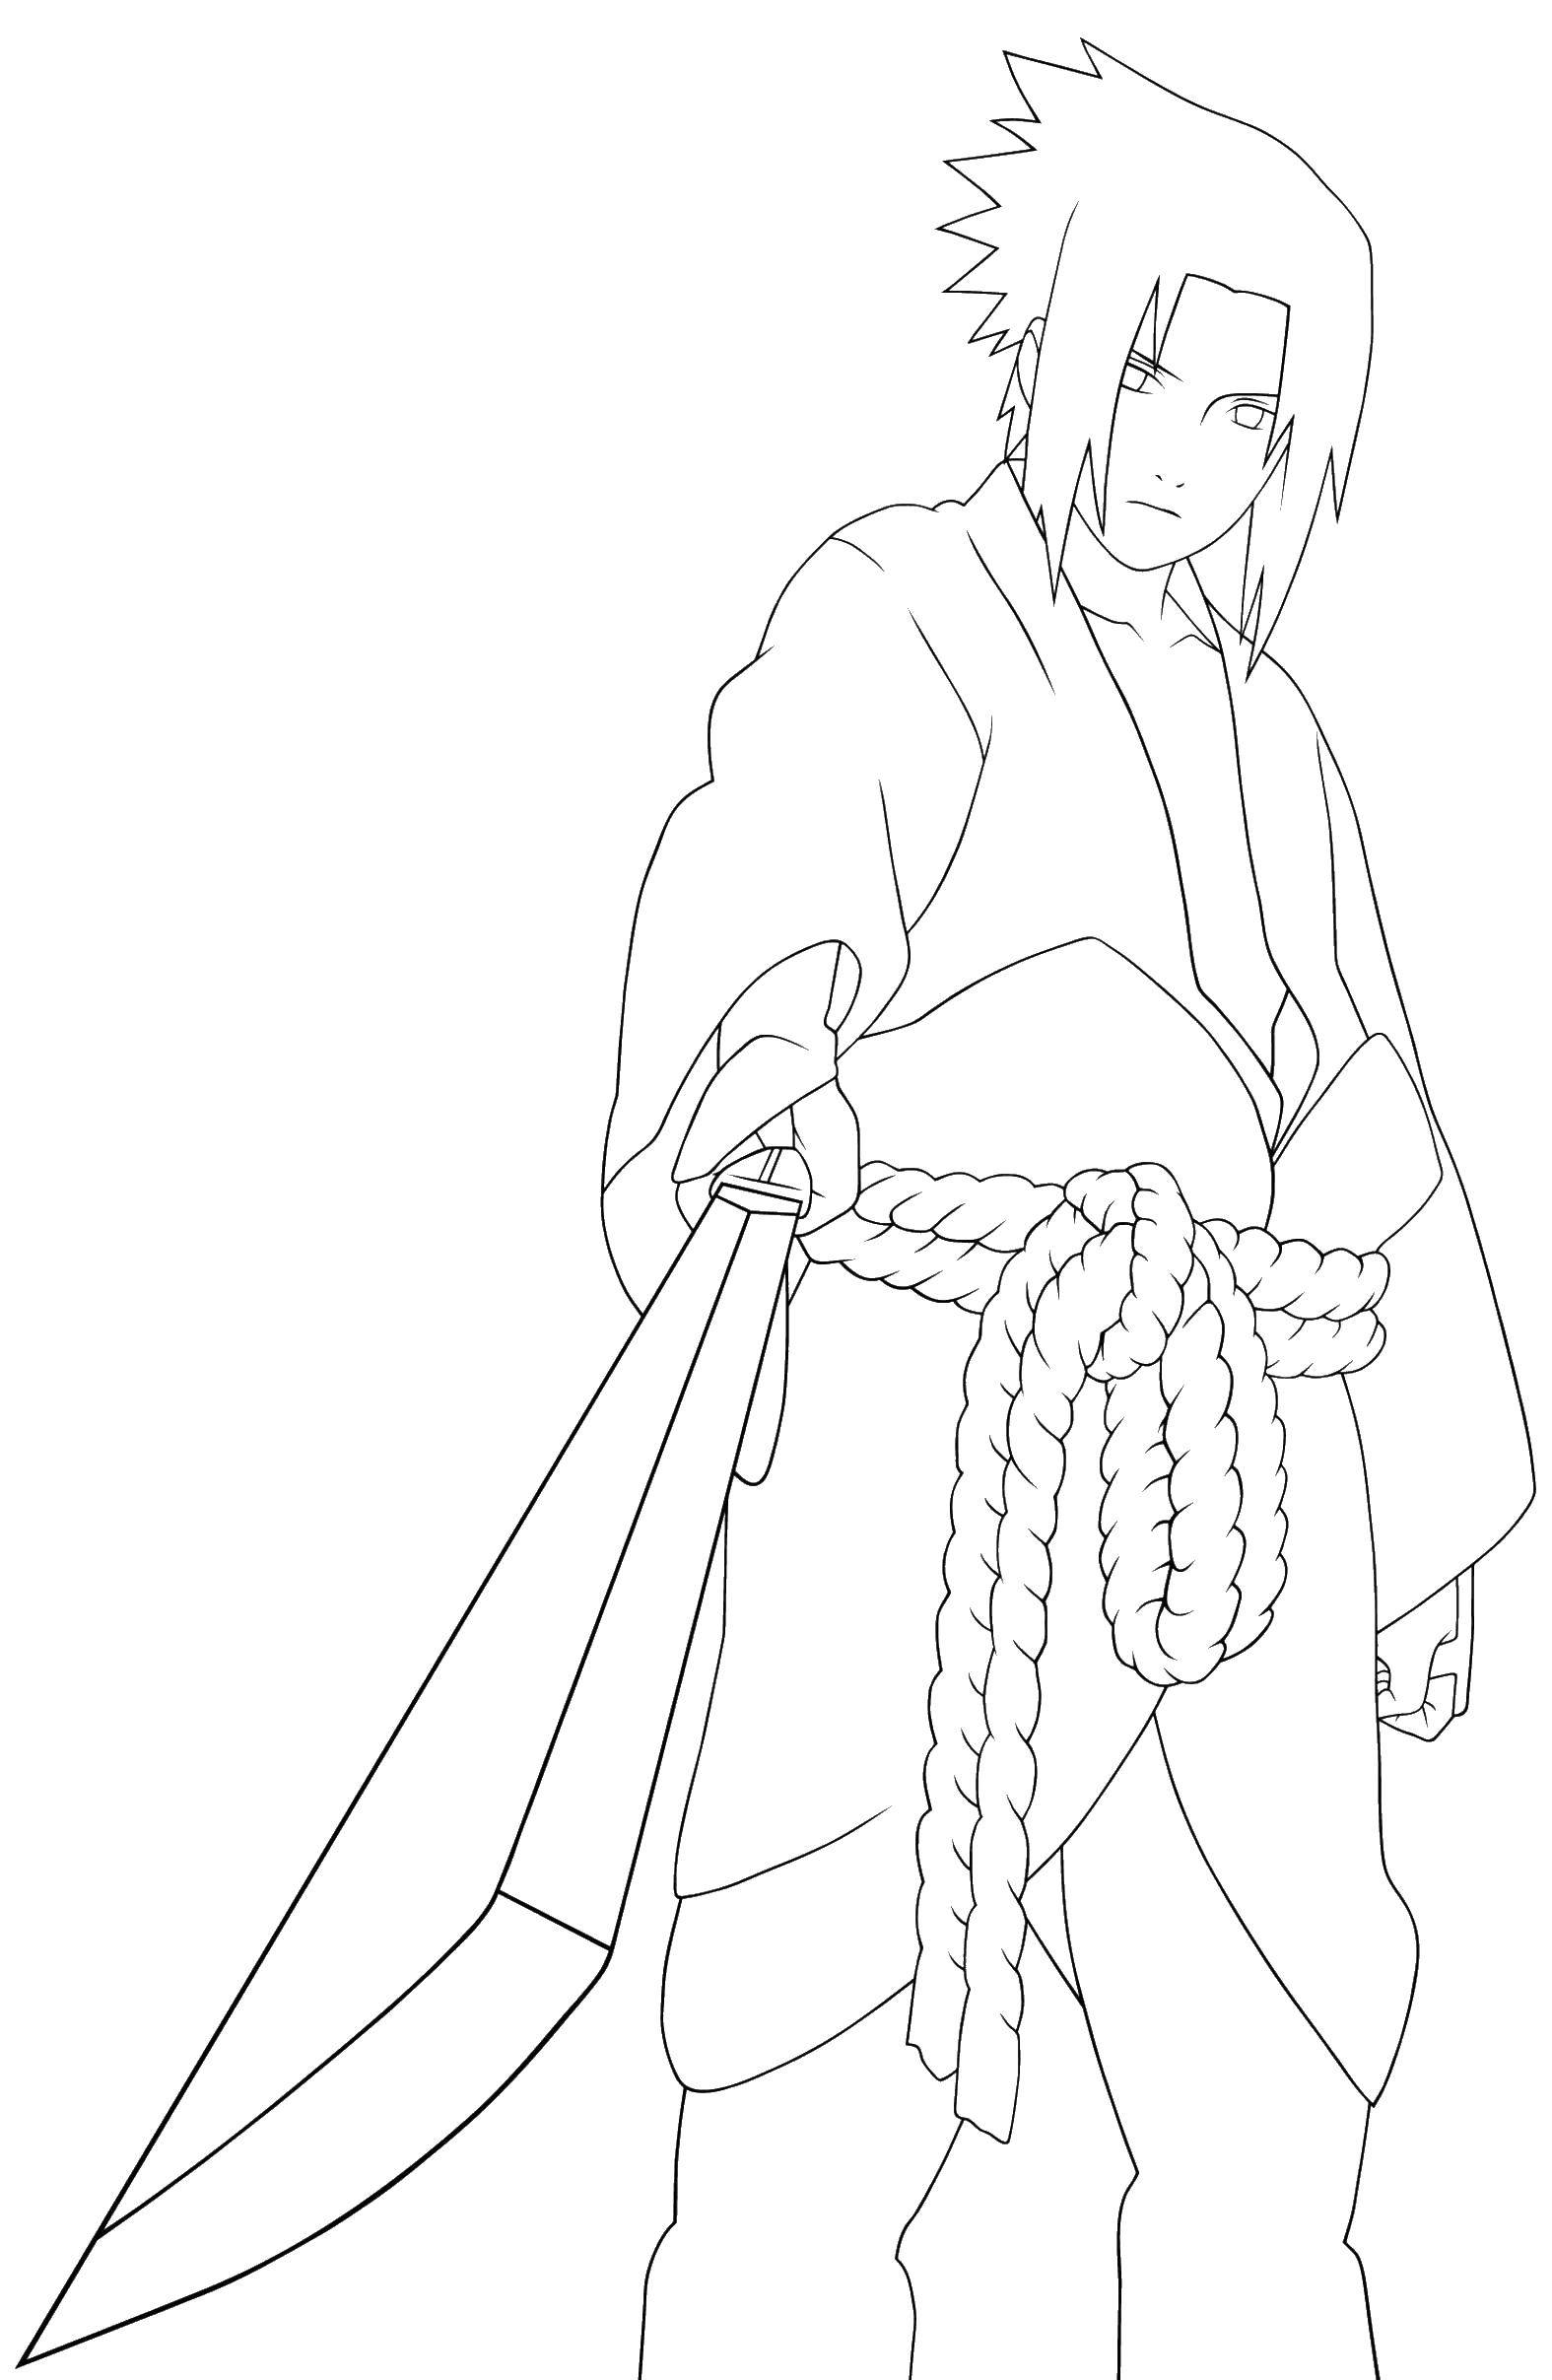 Coloring page - Uchiha Sasuke